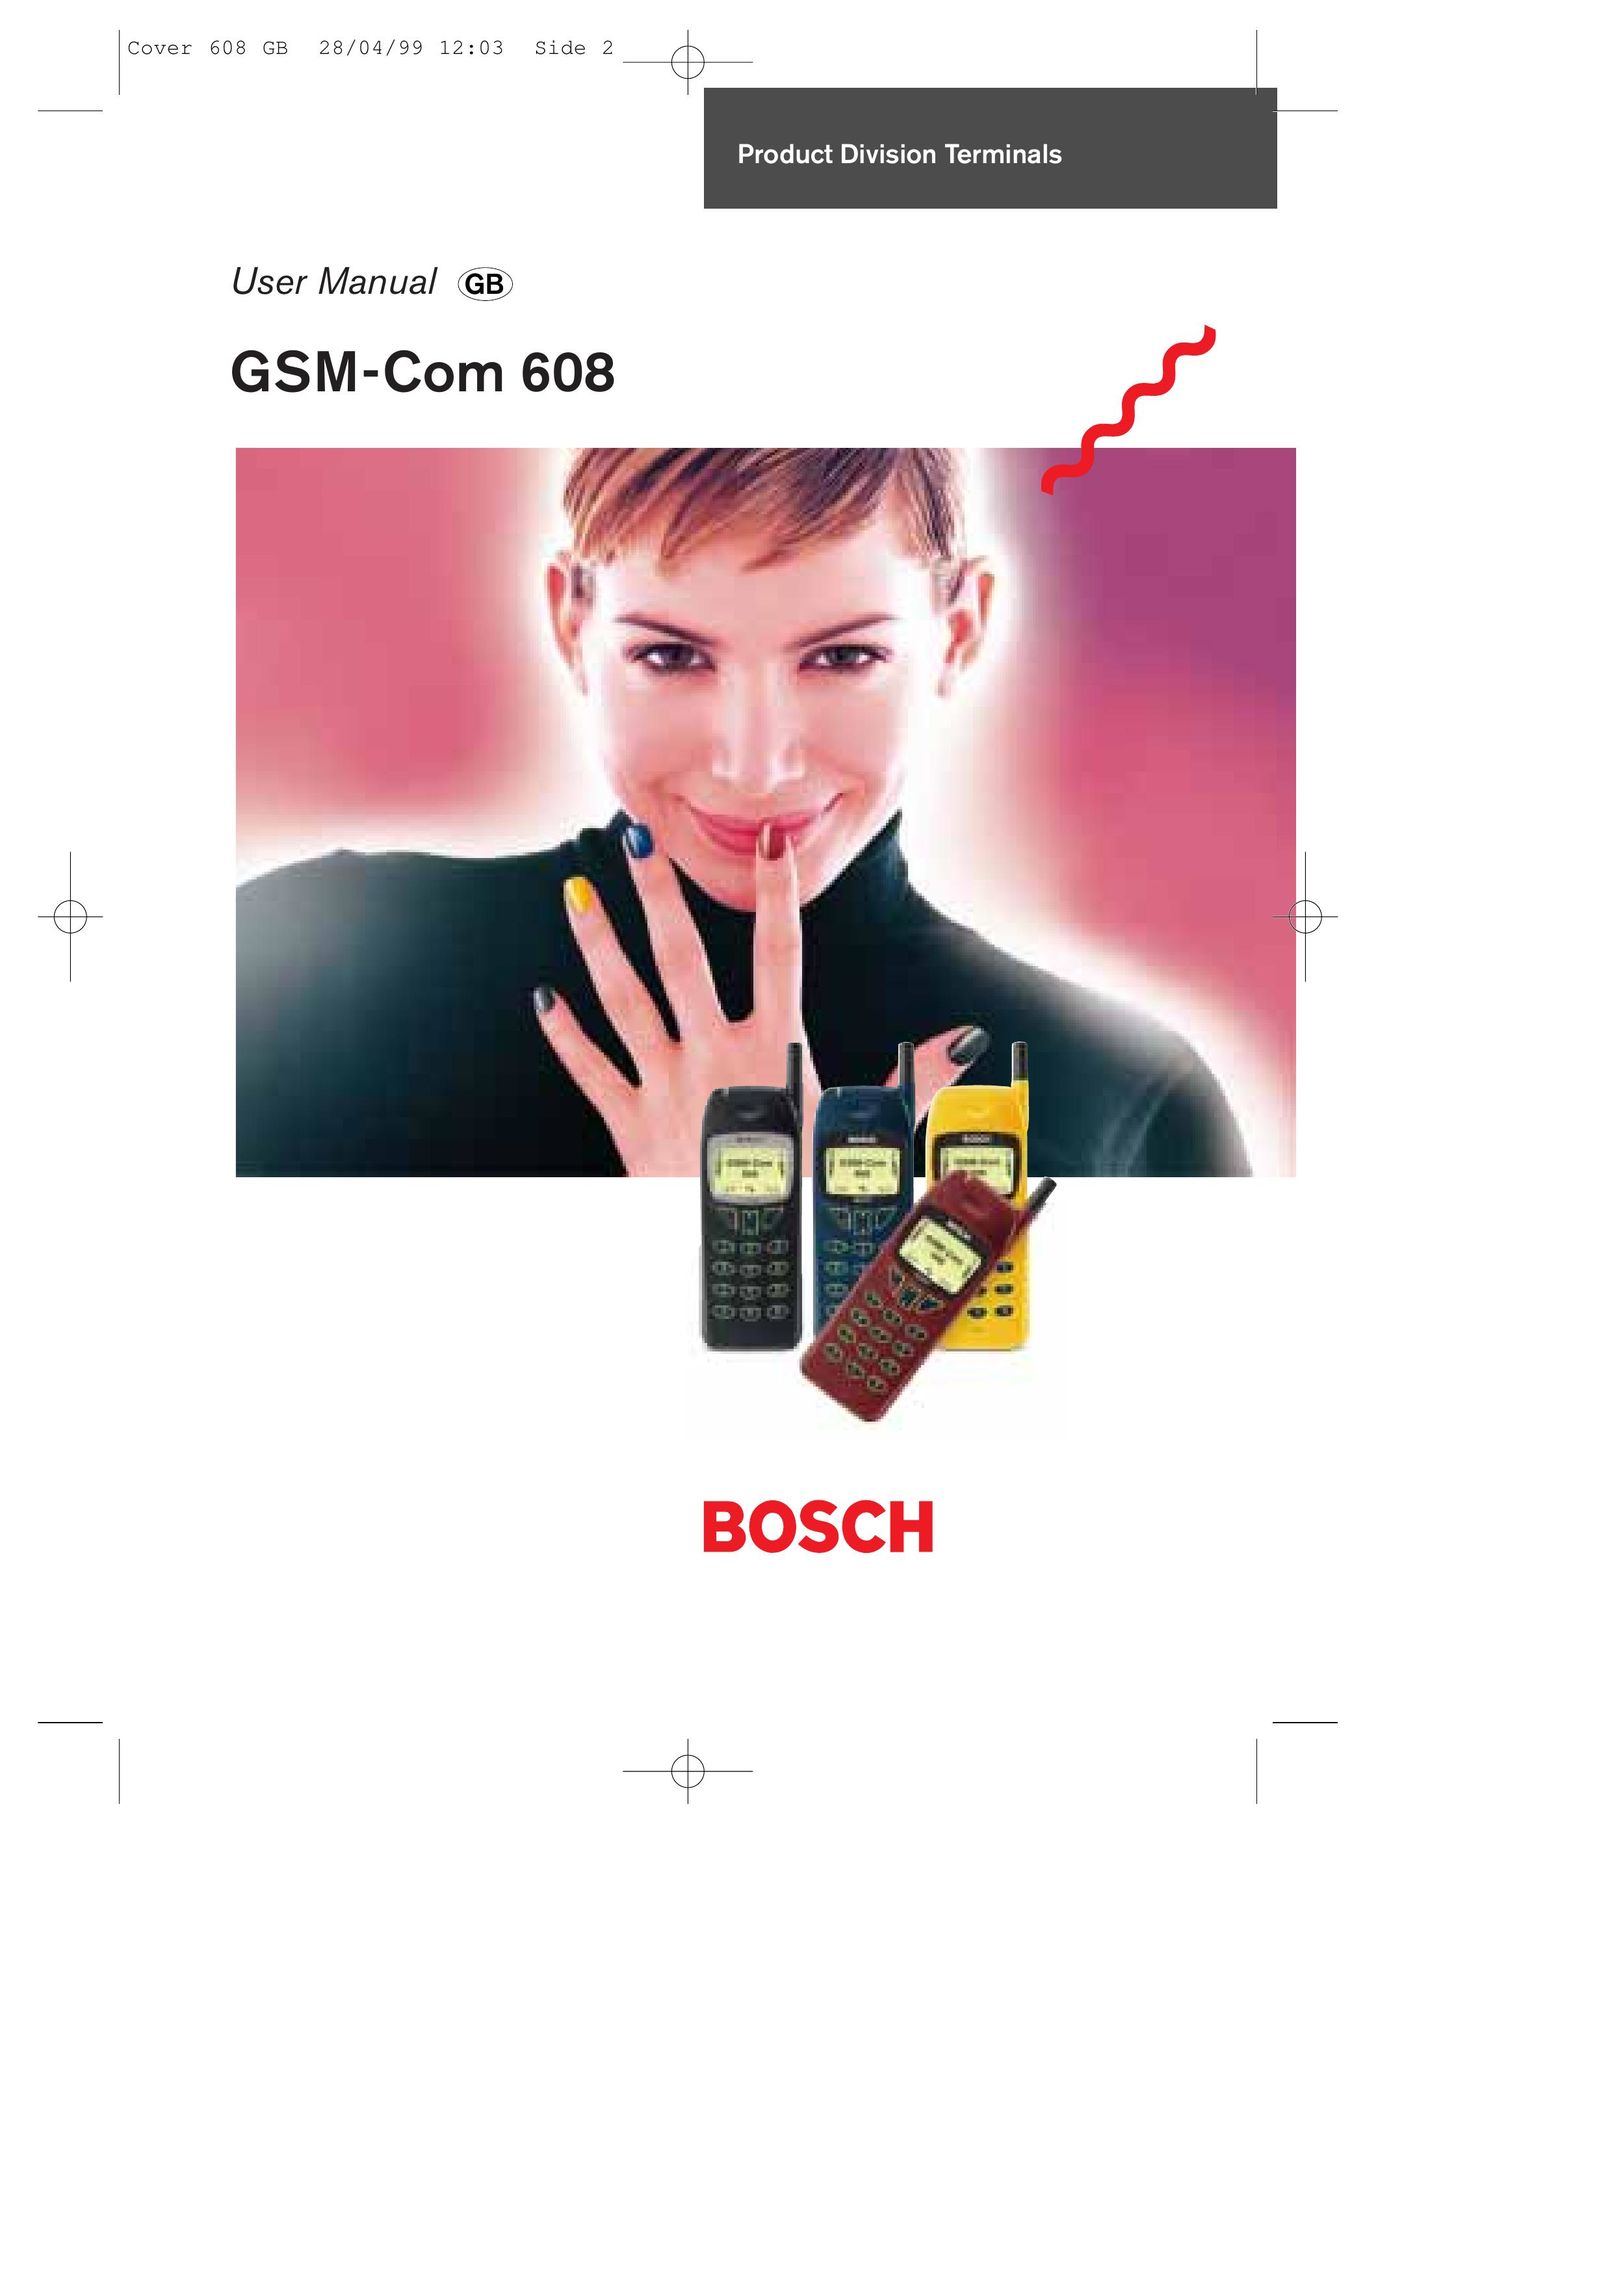 Bosch Appliances GSM-Com 608 Cell Phone User Manual